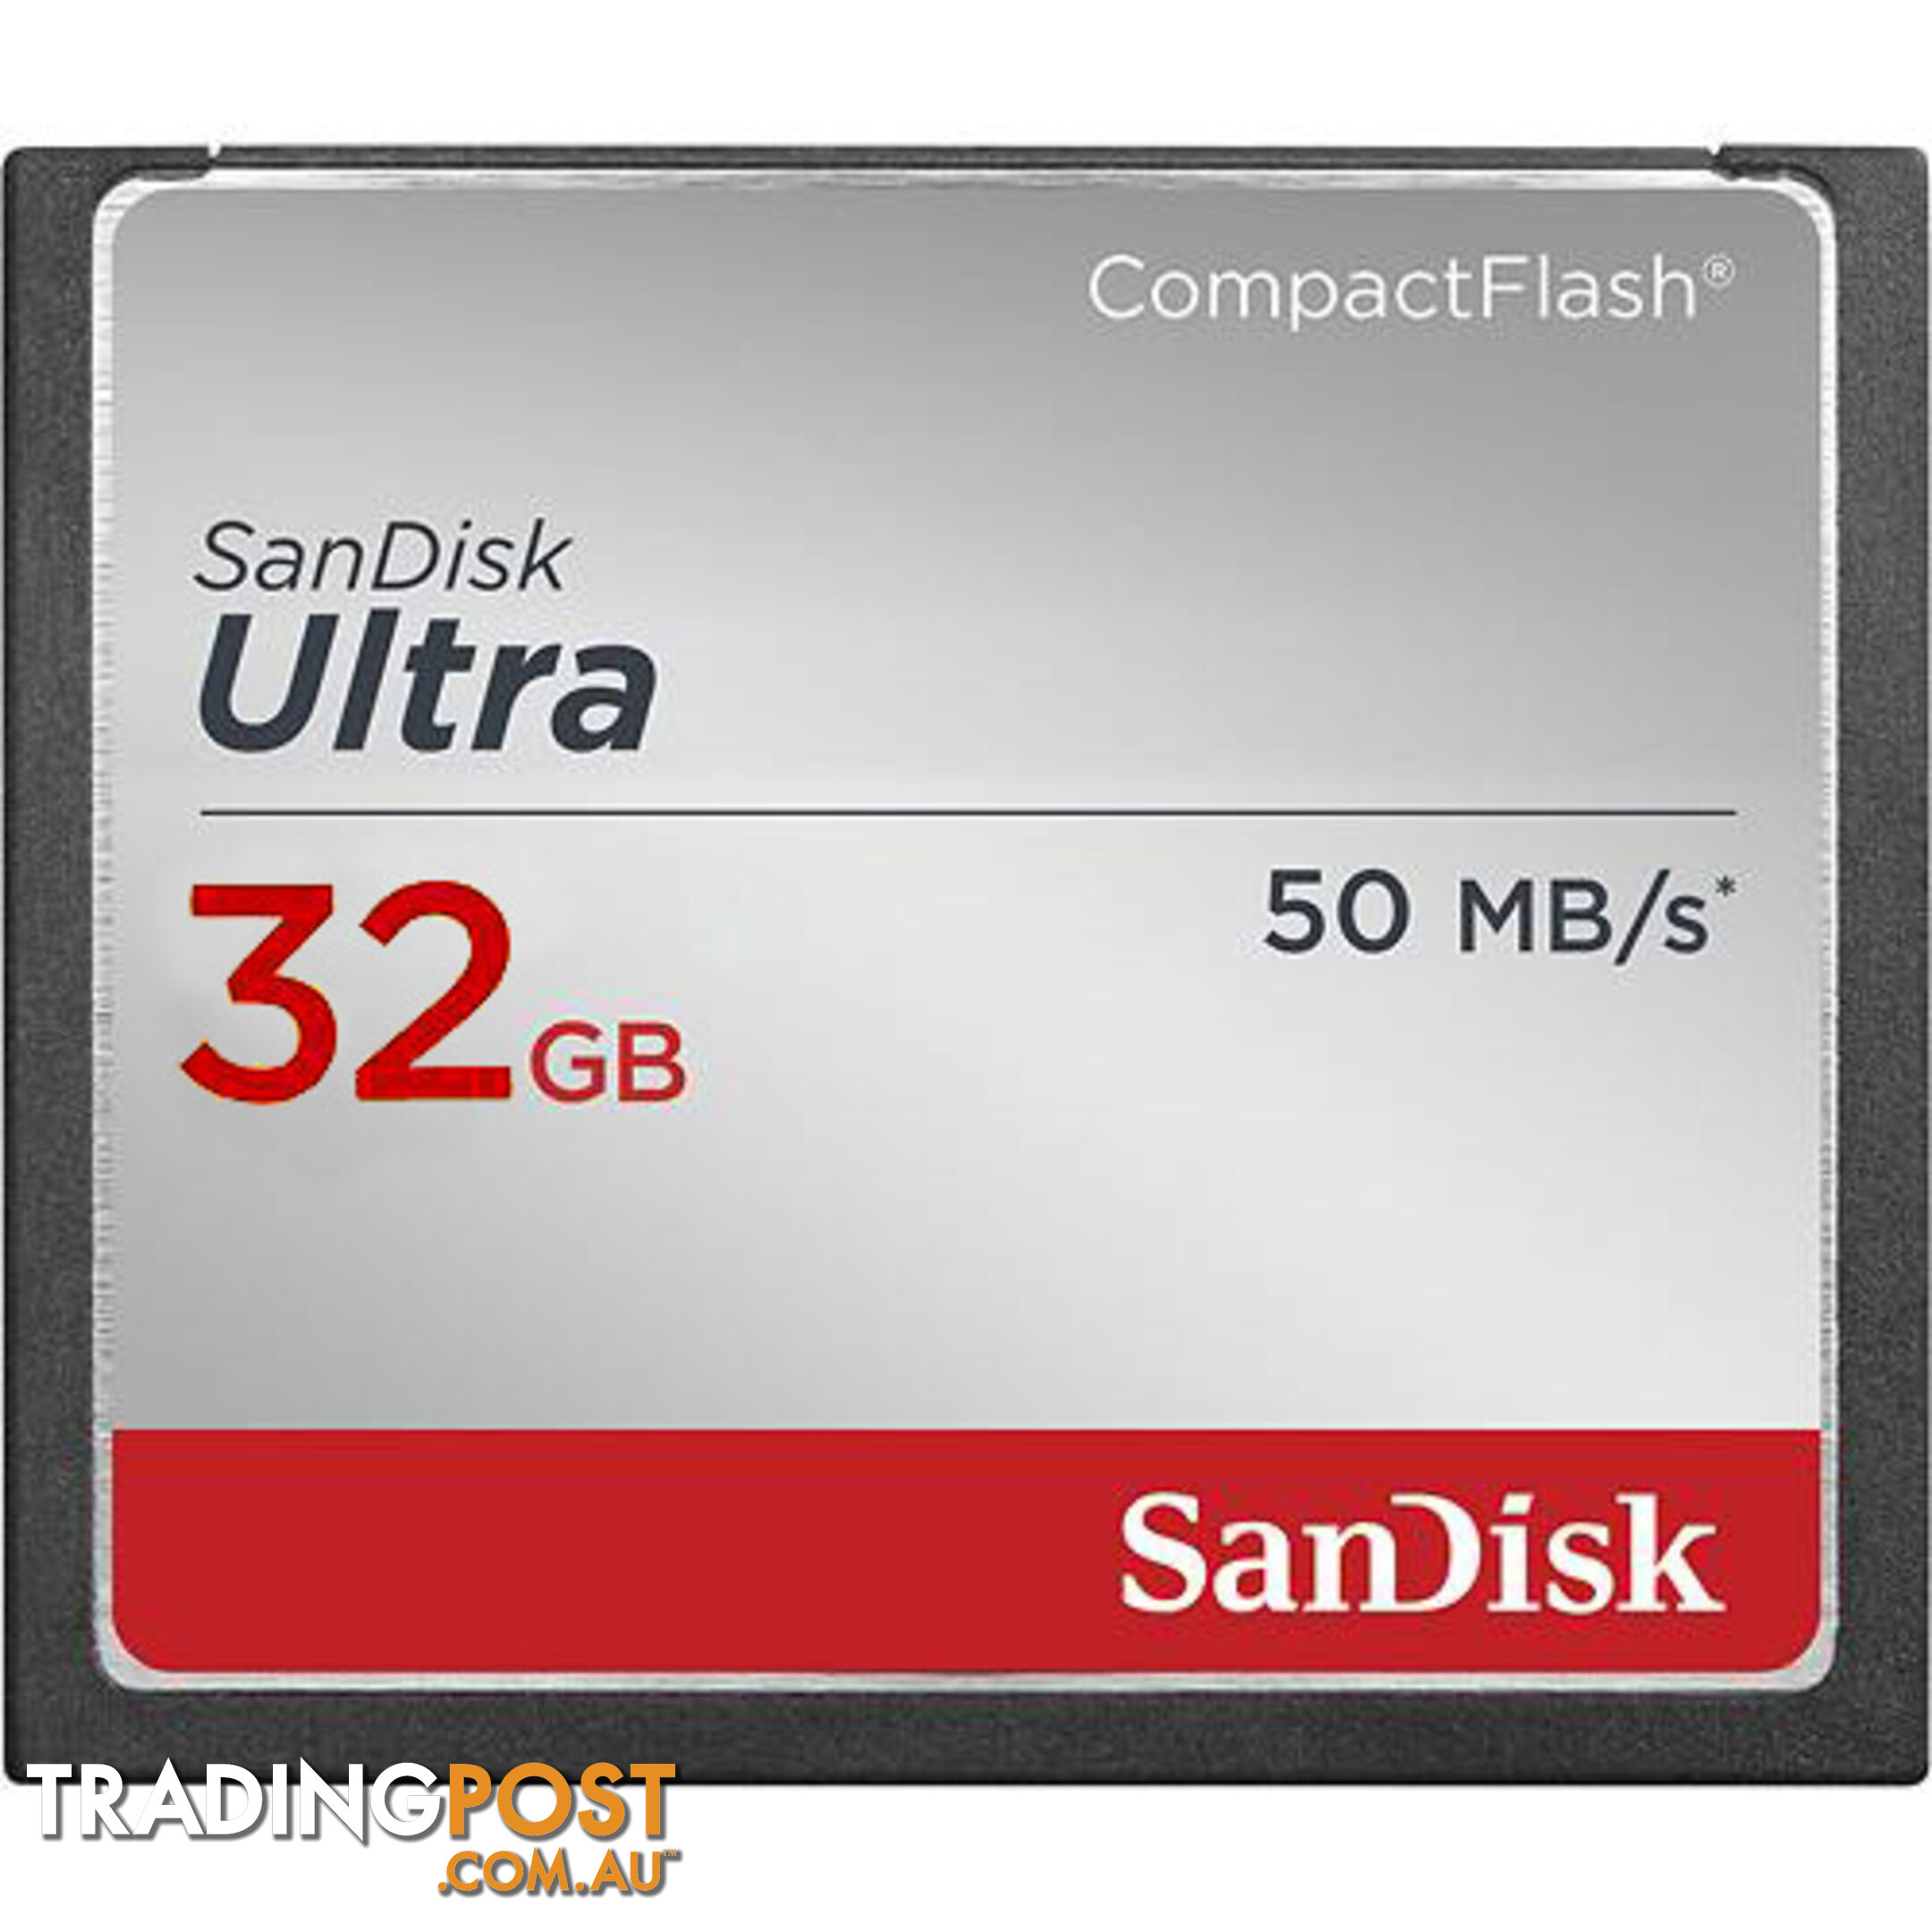 SanDisk Ultra 32GB CompactFlash 50MB/s